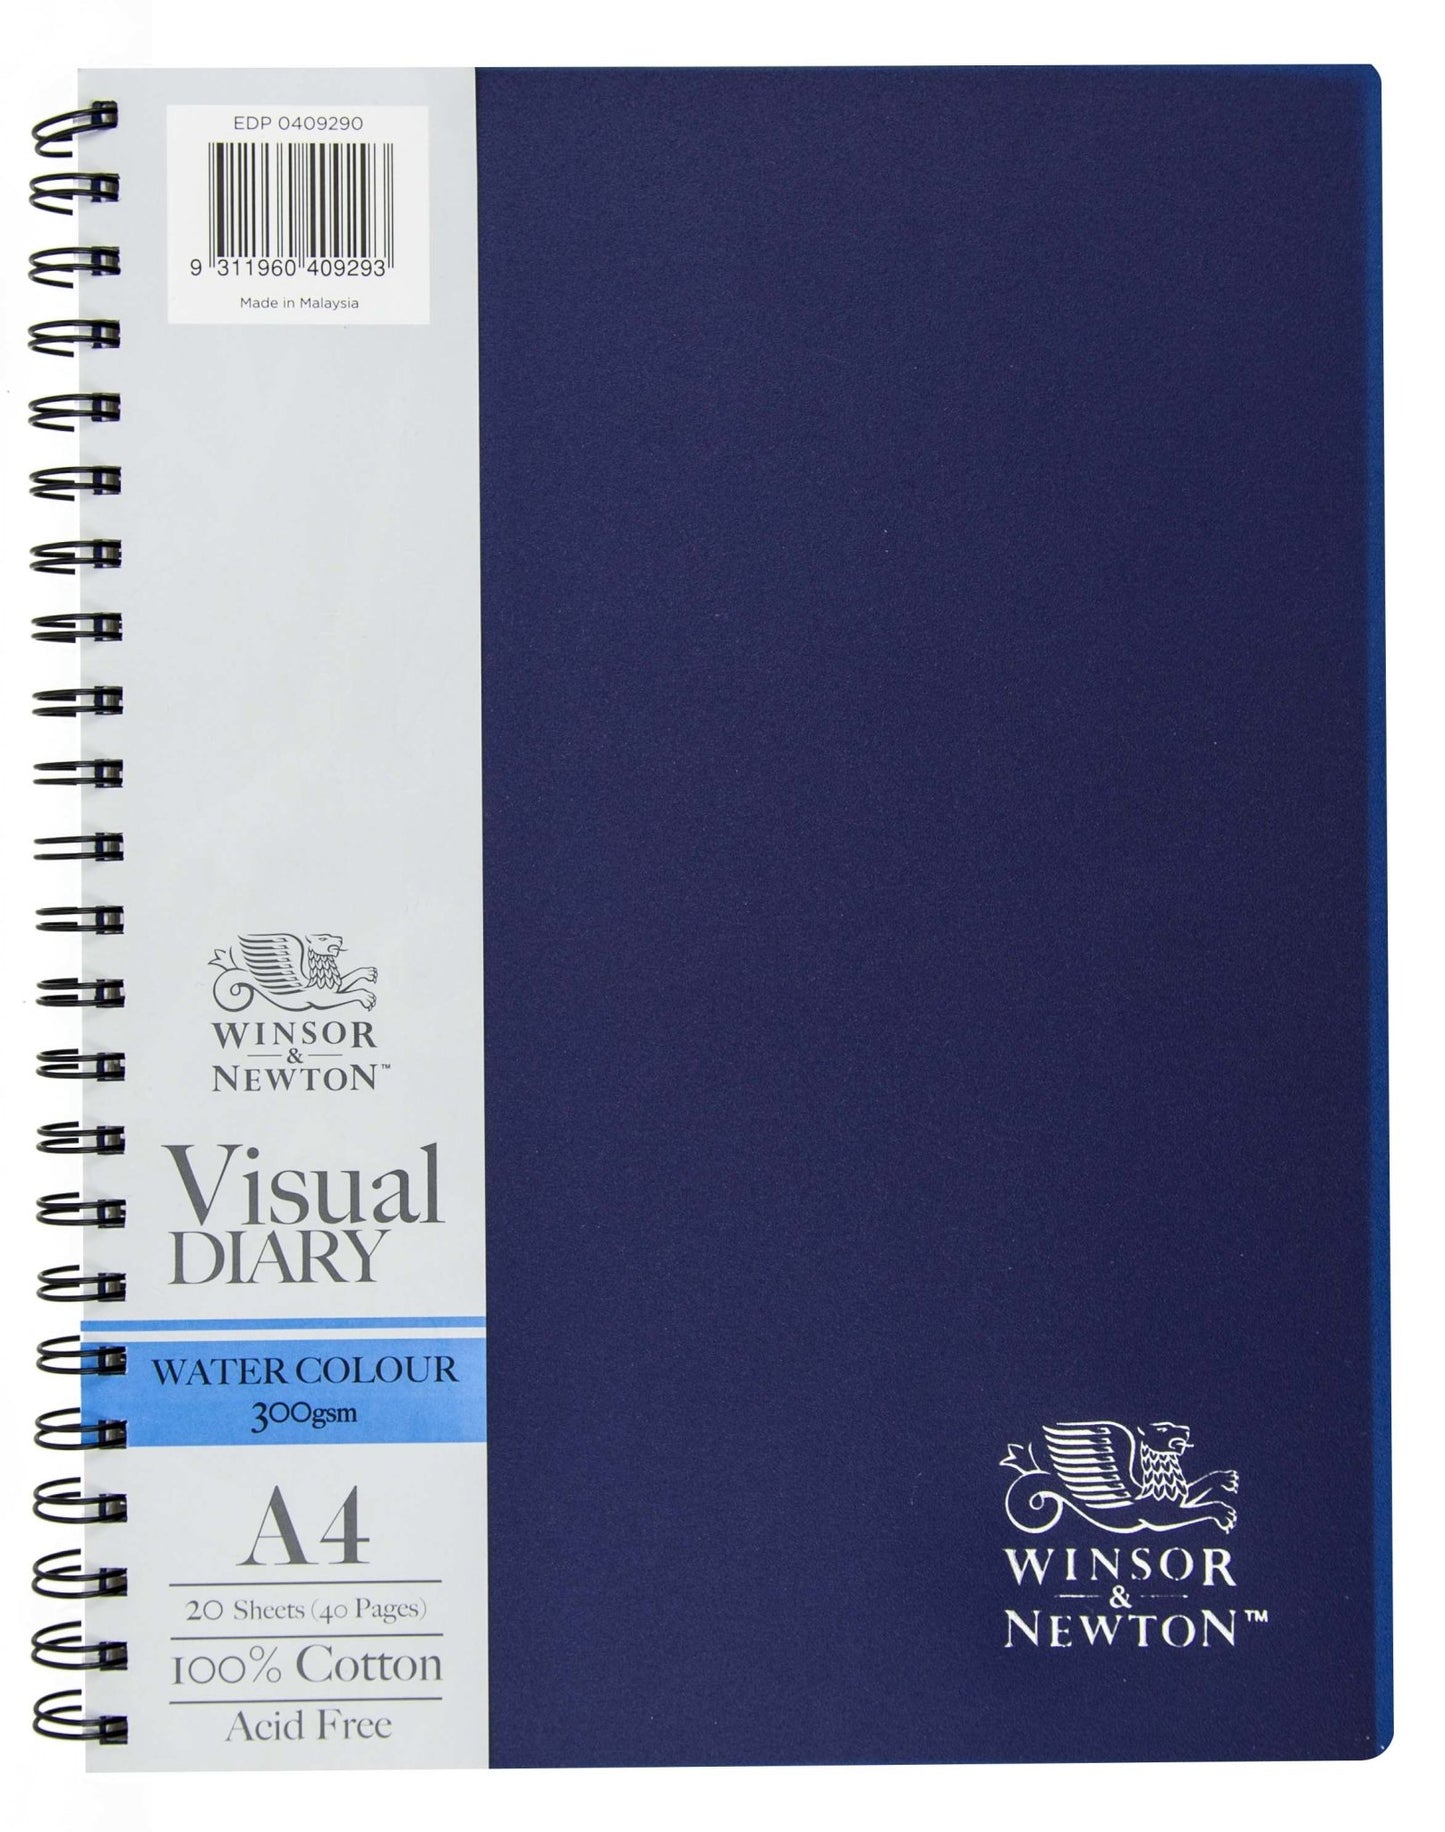 W & N W/C Visual Diary A4 300gsm 20 Sheet - theartshop.com.au